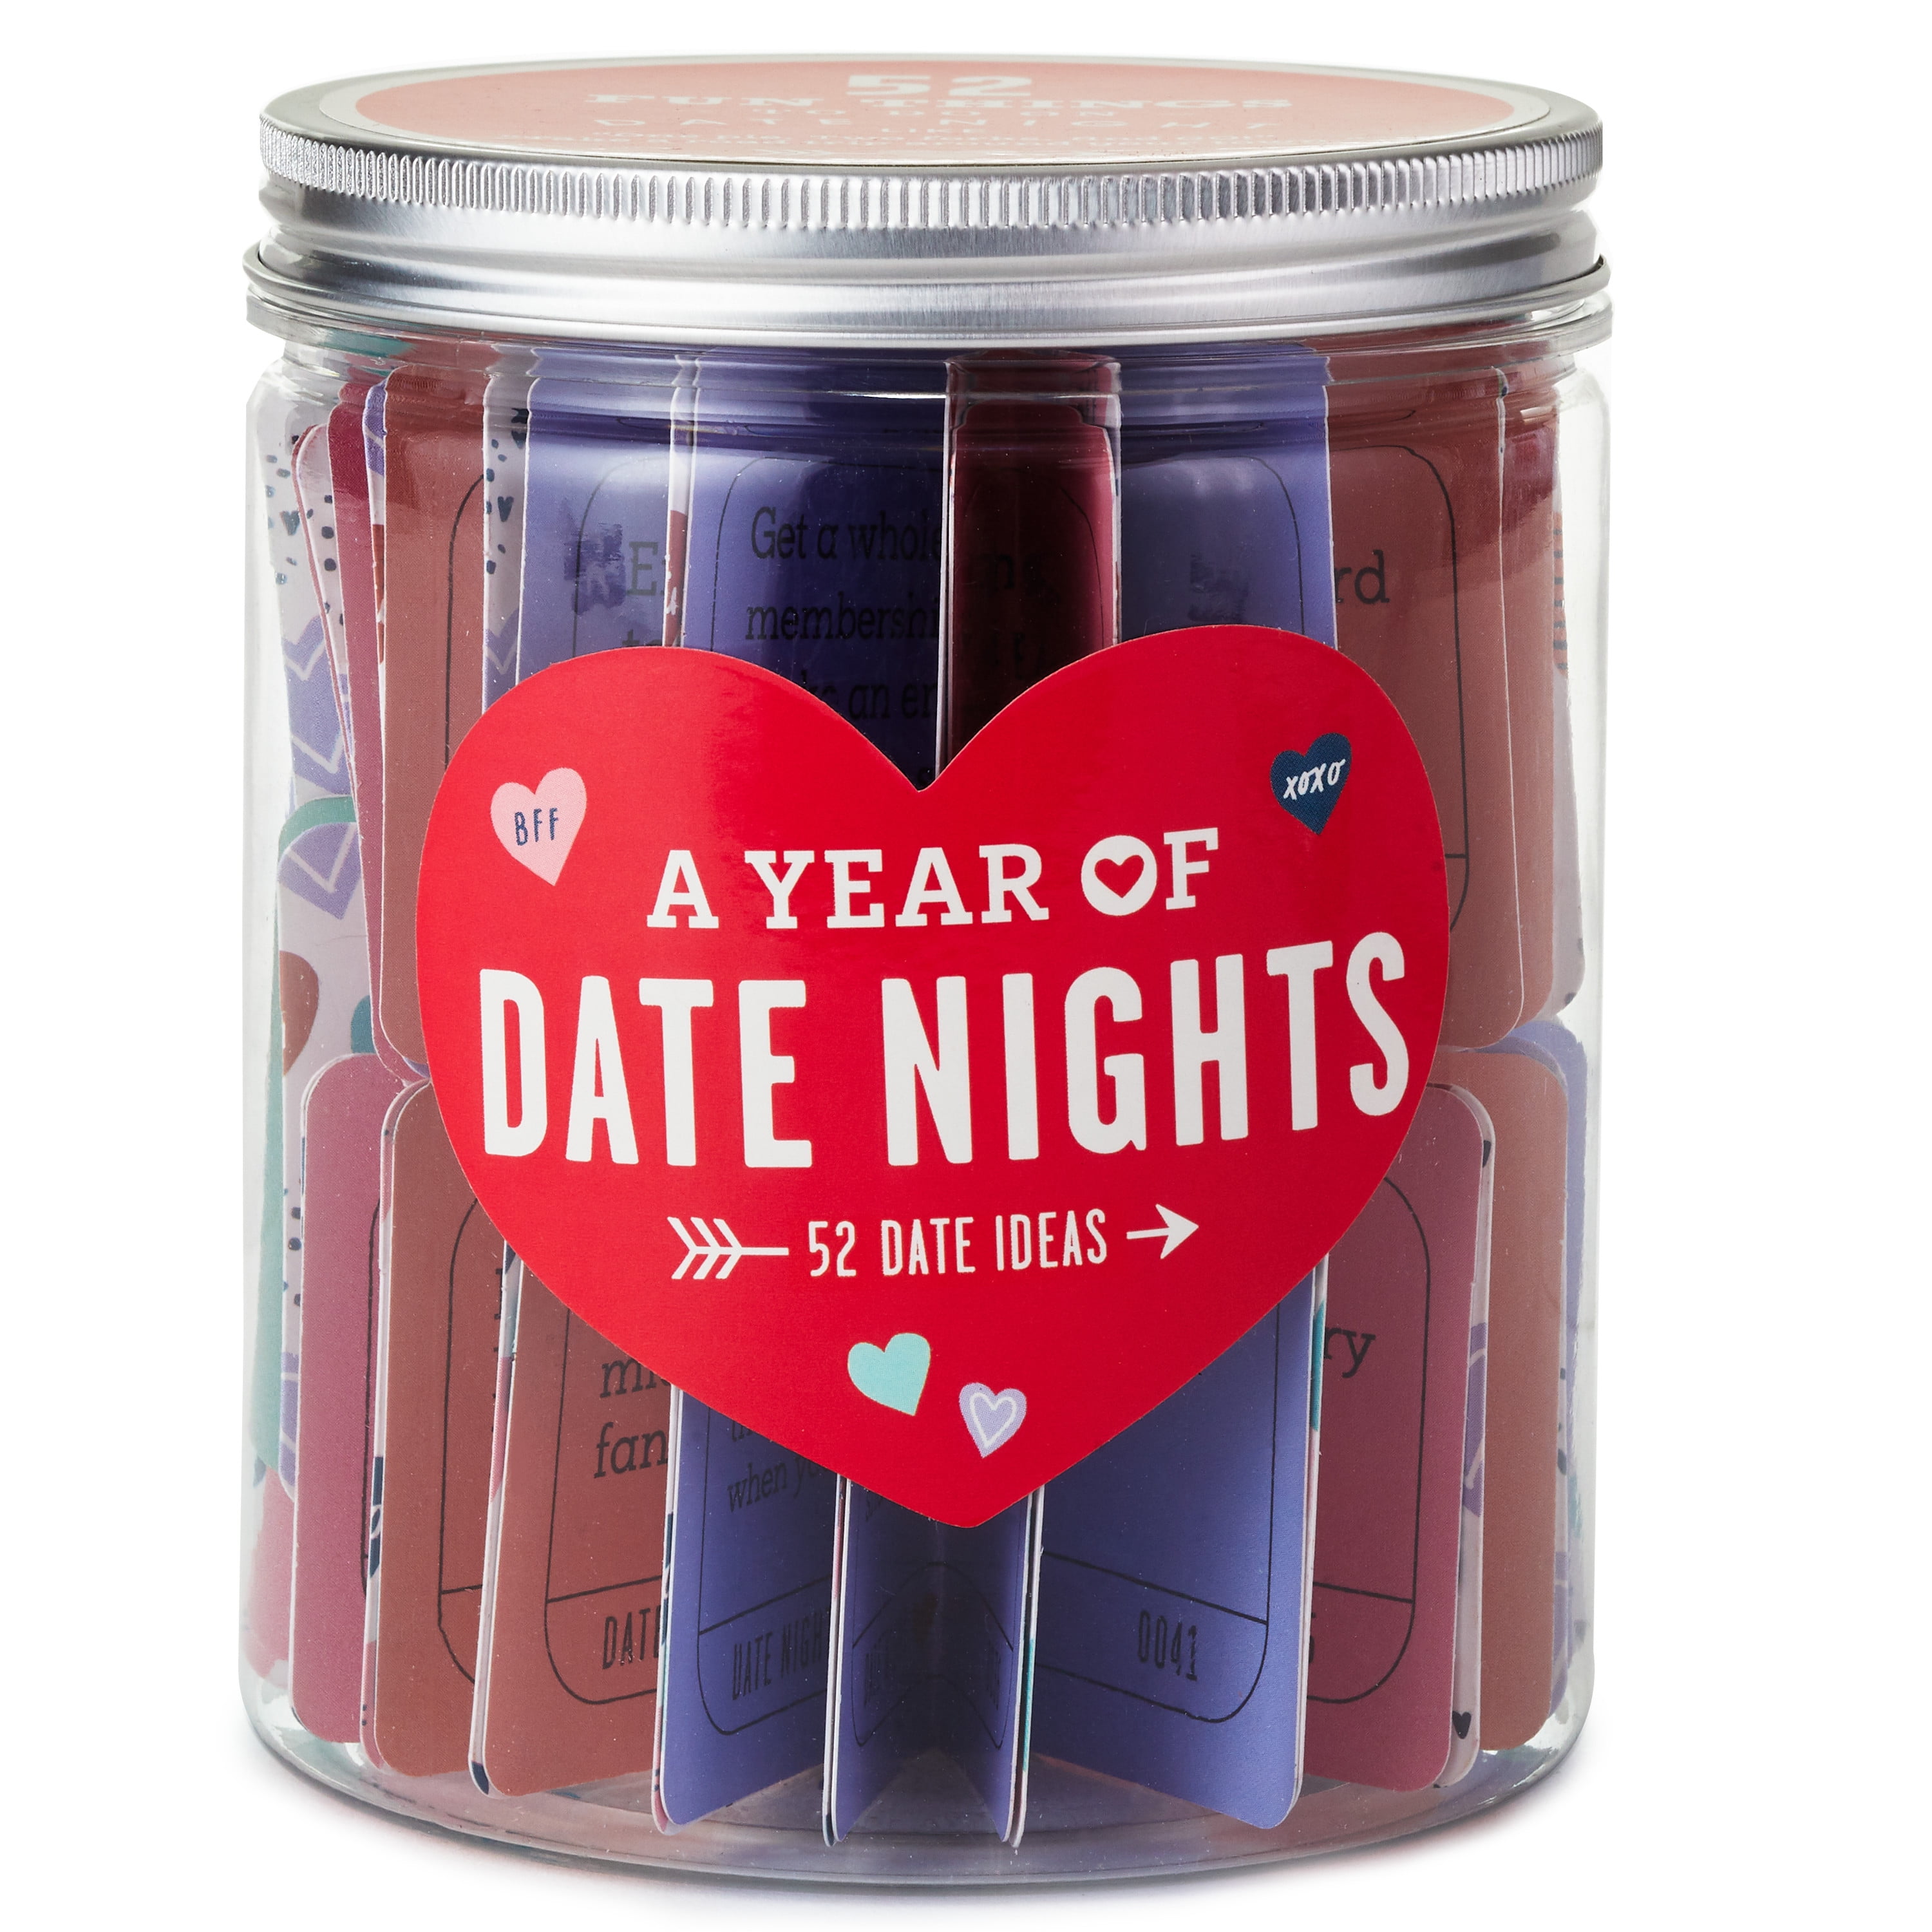 At Home Date Night Ideas -   Date night jar, Romantic date night ideas,  Date night